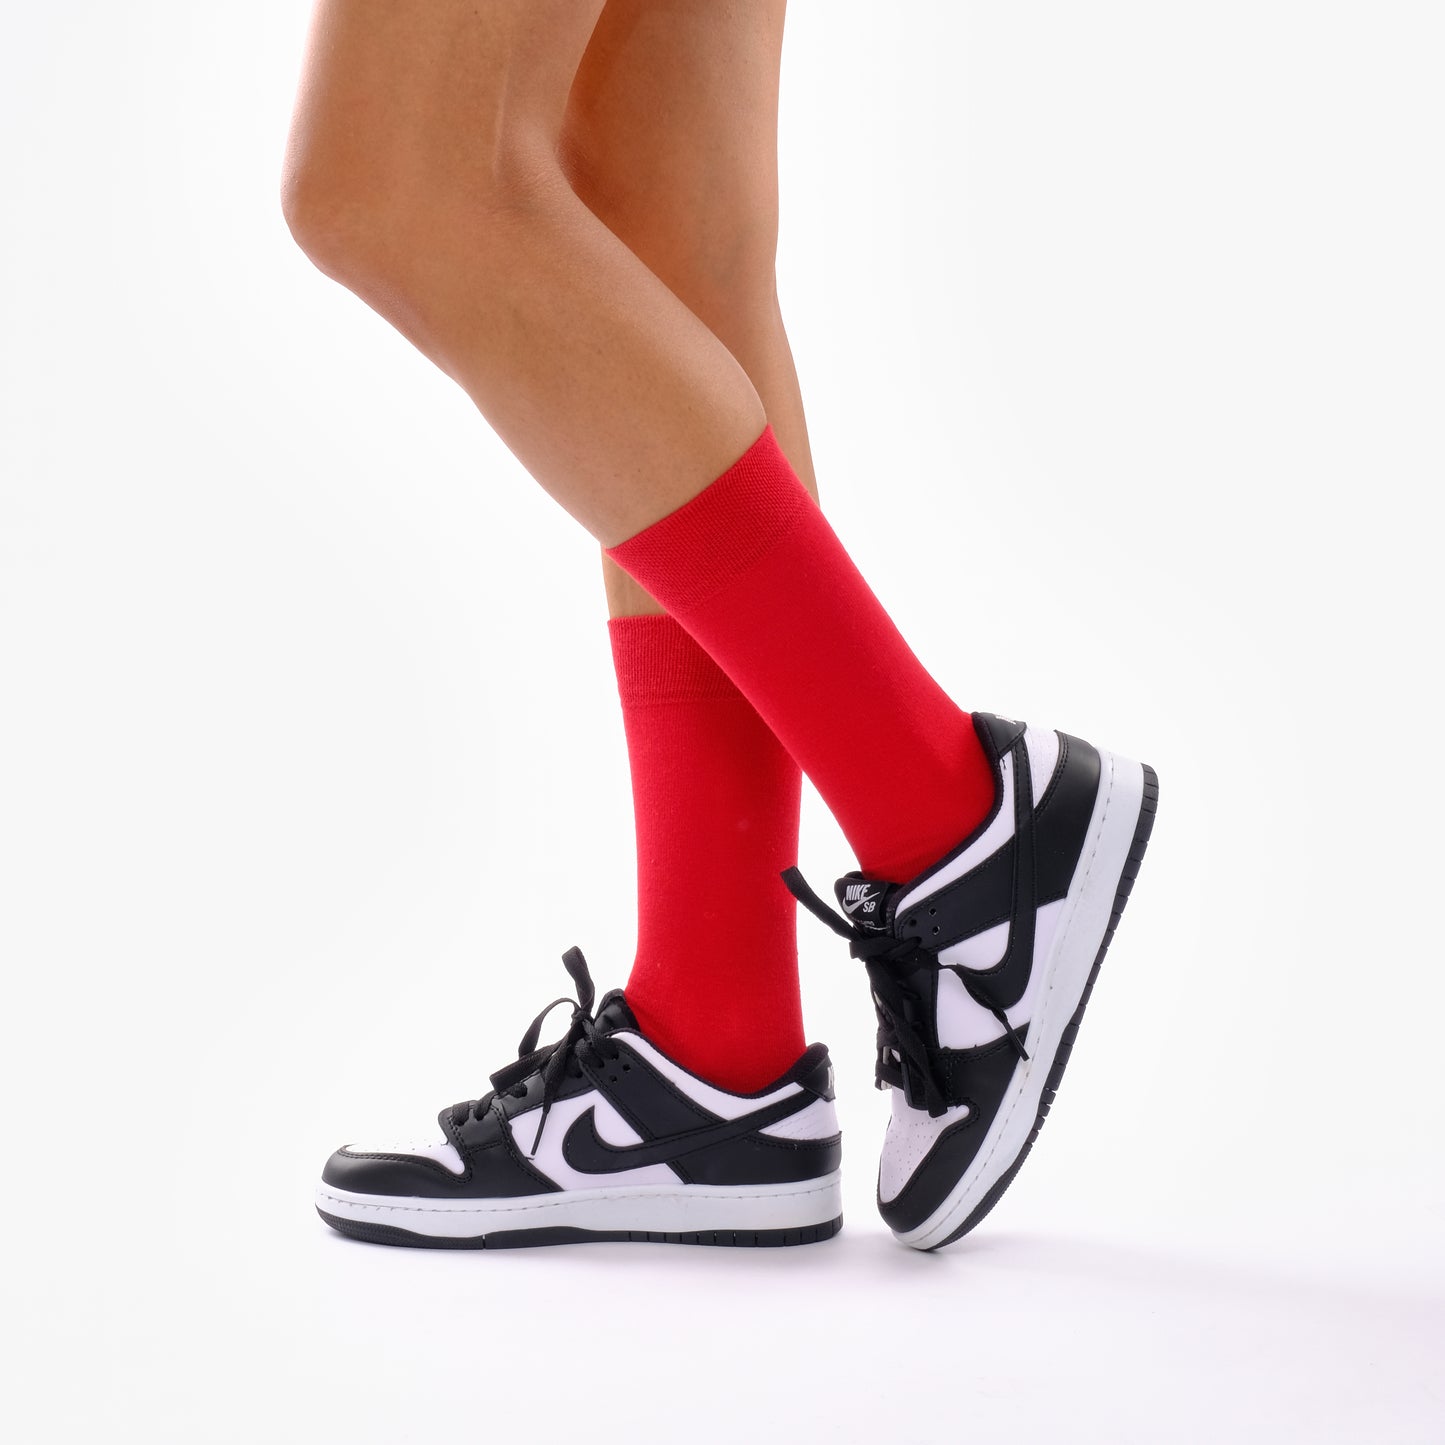 Twin Red Socks